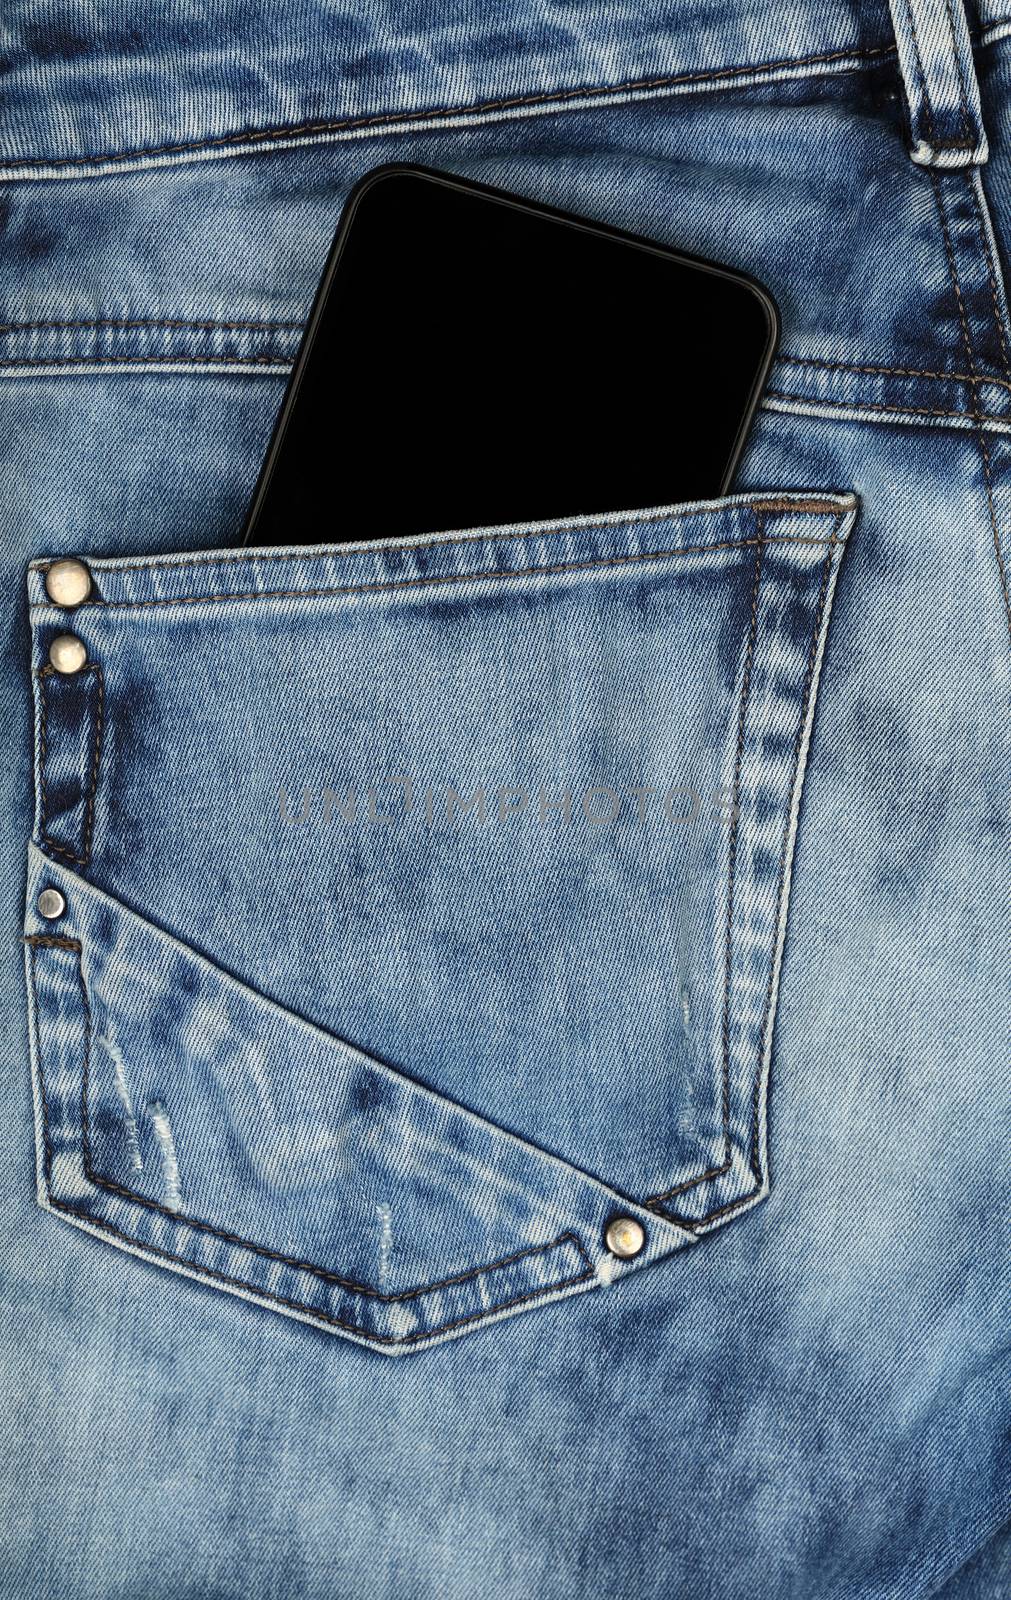 Black smartphone in jeans back pocket by BreakingTheWalls